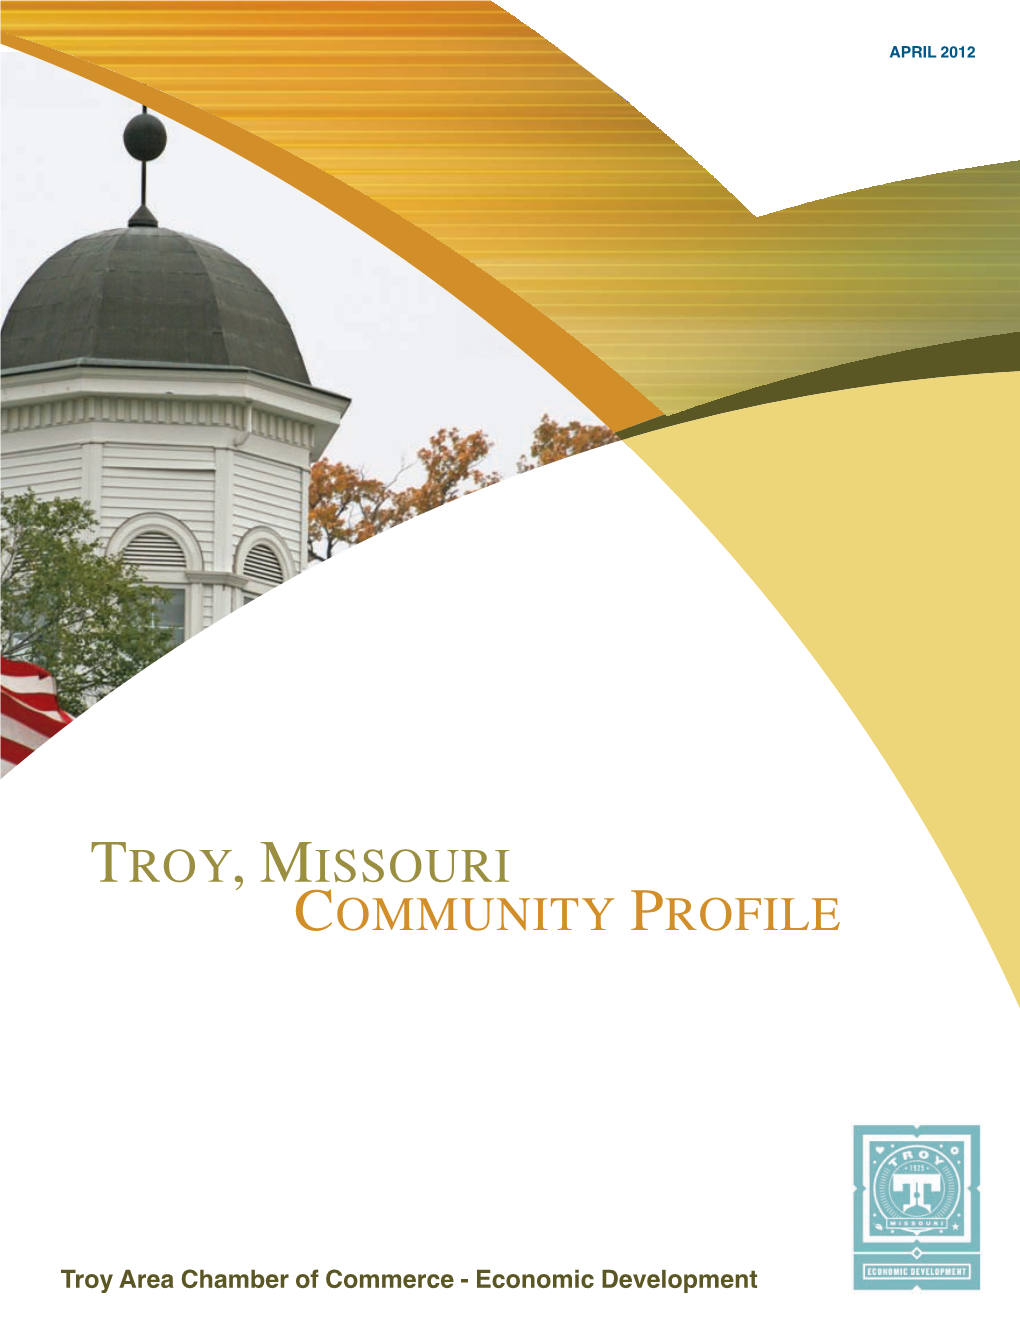 Troy, Missouri Community Profile